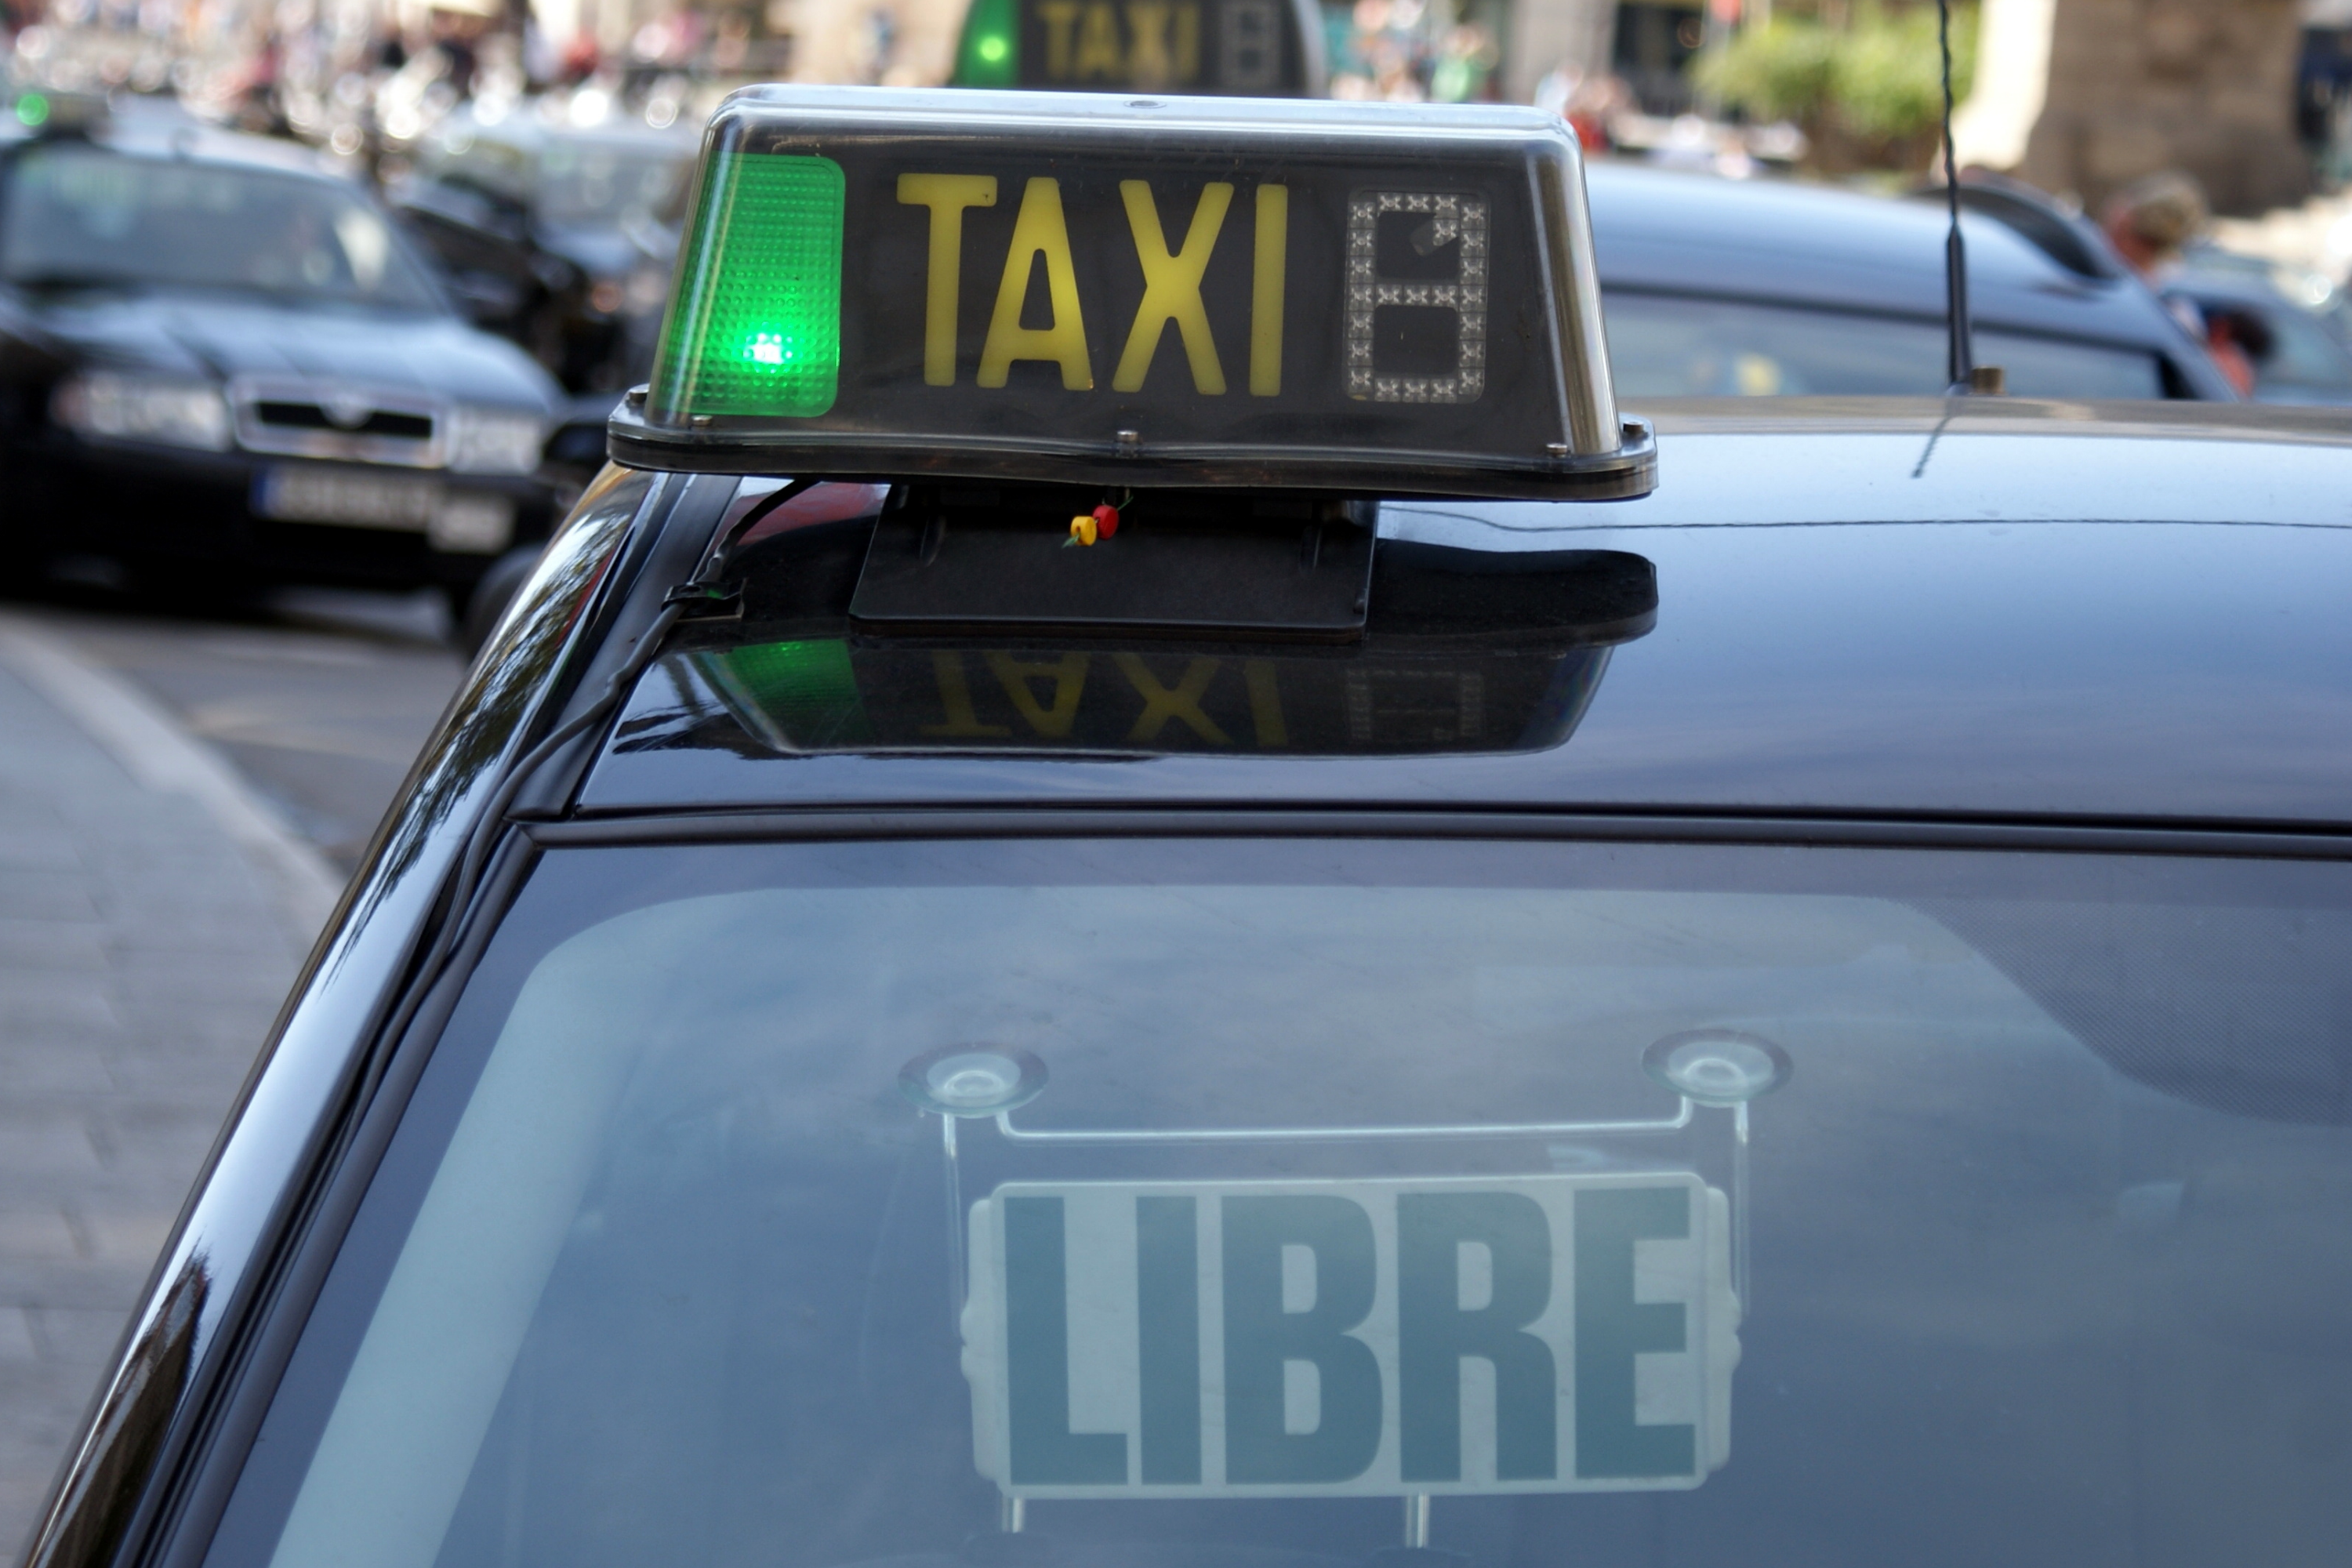 taksi di barcelona liter lampu hijau